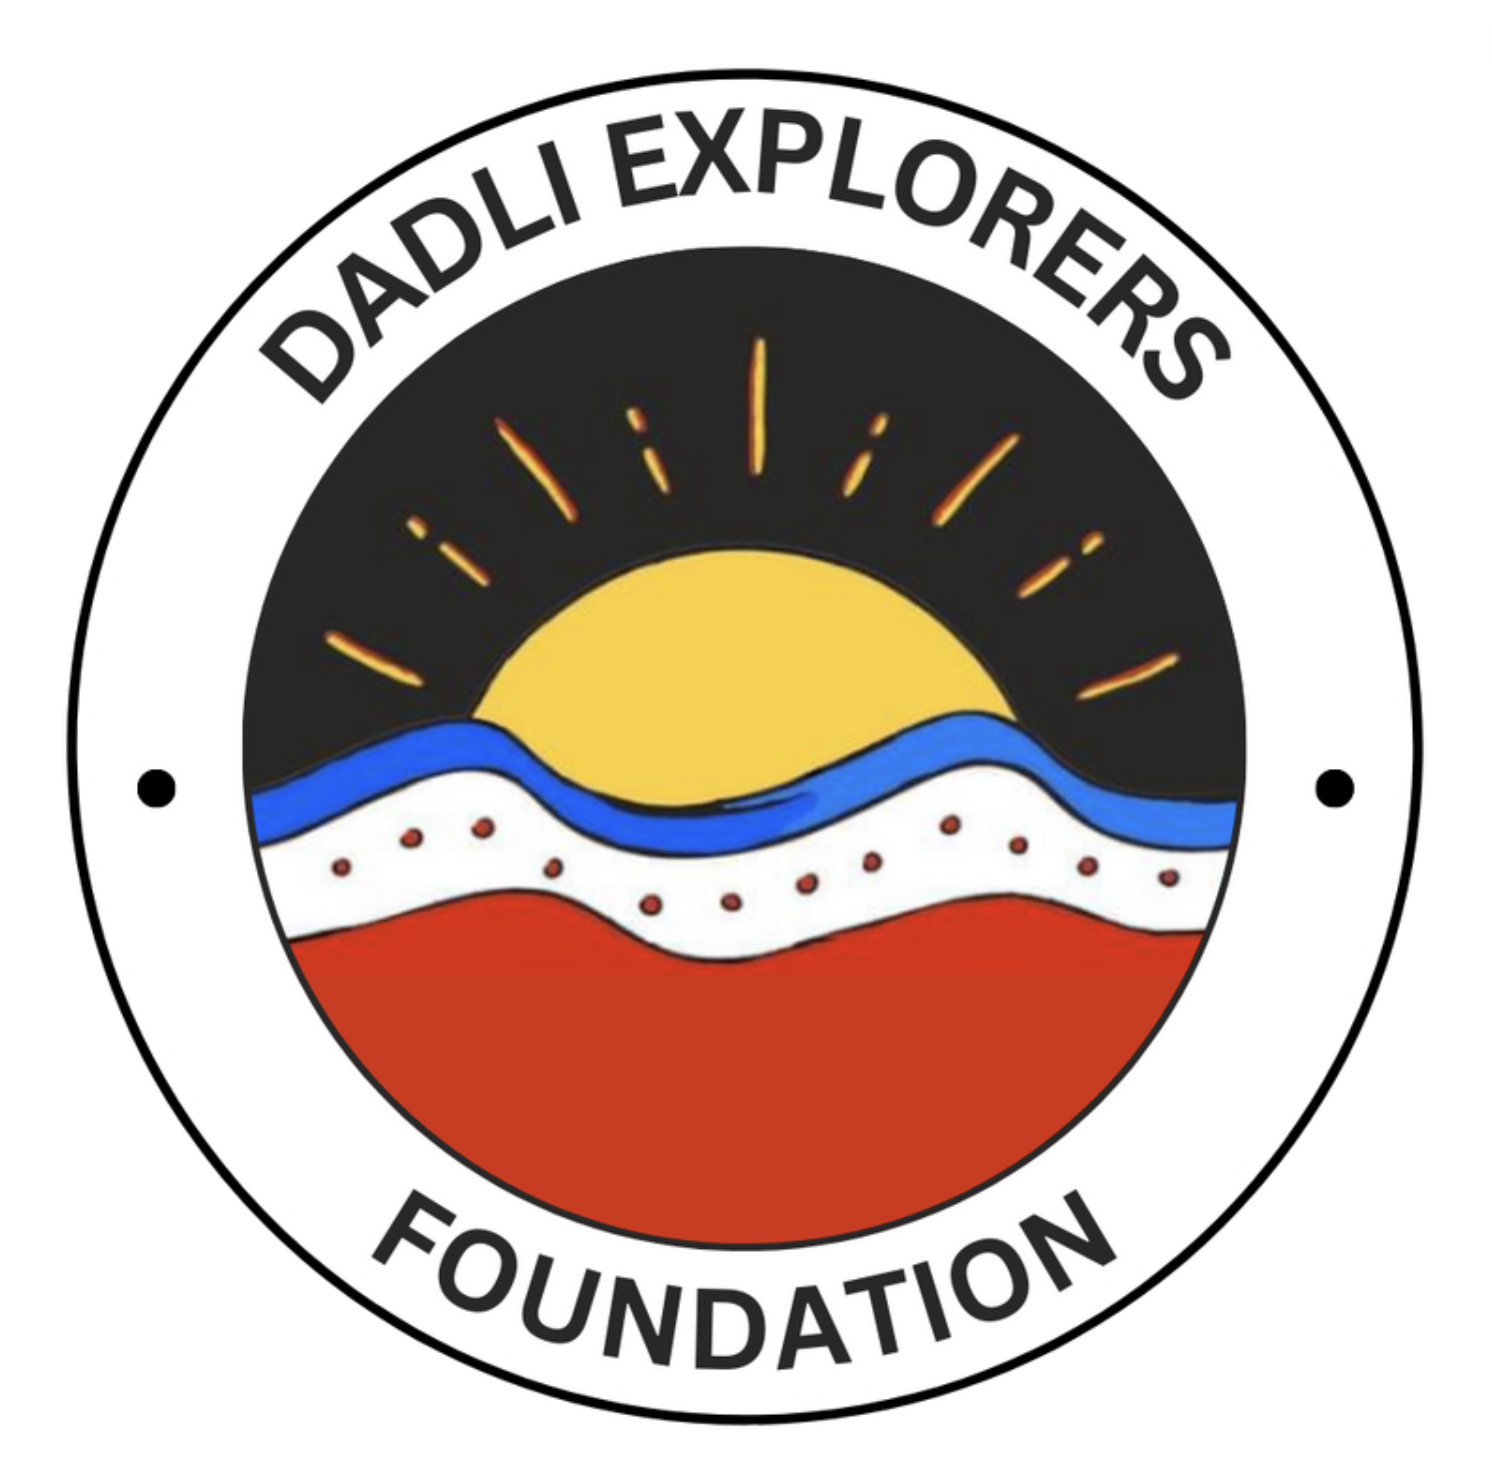 The Dadli Explorers